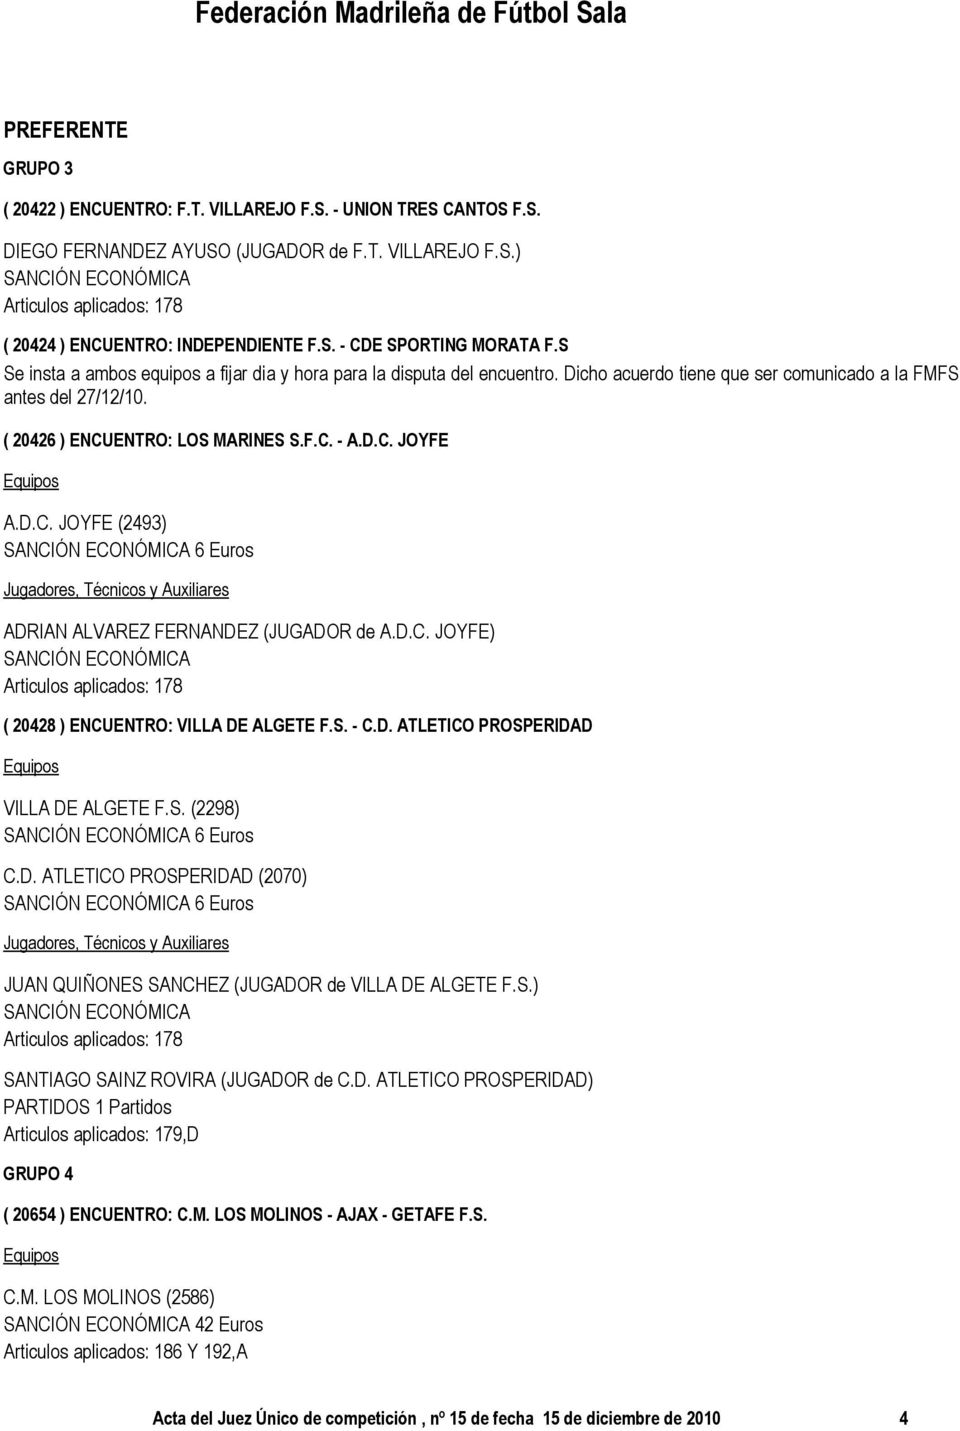 D.C. JOYFE (2493) 6 Euros ADRIAN ALVAREZ FERNANDEZ (JUGADOR de A.D.C. JOYFE) ( 20428 ) ENCUENTRO: VILLA DE ALGETE F.S. - C.D. ATLETICO PROSPERIDAD VILLA DE ALGETE F.S. (2298) 6 Euros C.D. ATLETICO PROSPERIDAD (2070) 6 Euros JUAN QUIÑONES SANCHEZ (JUGADOR de VILLA DE ALGETE F.